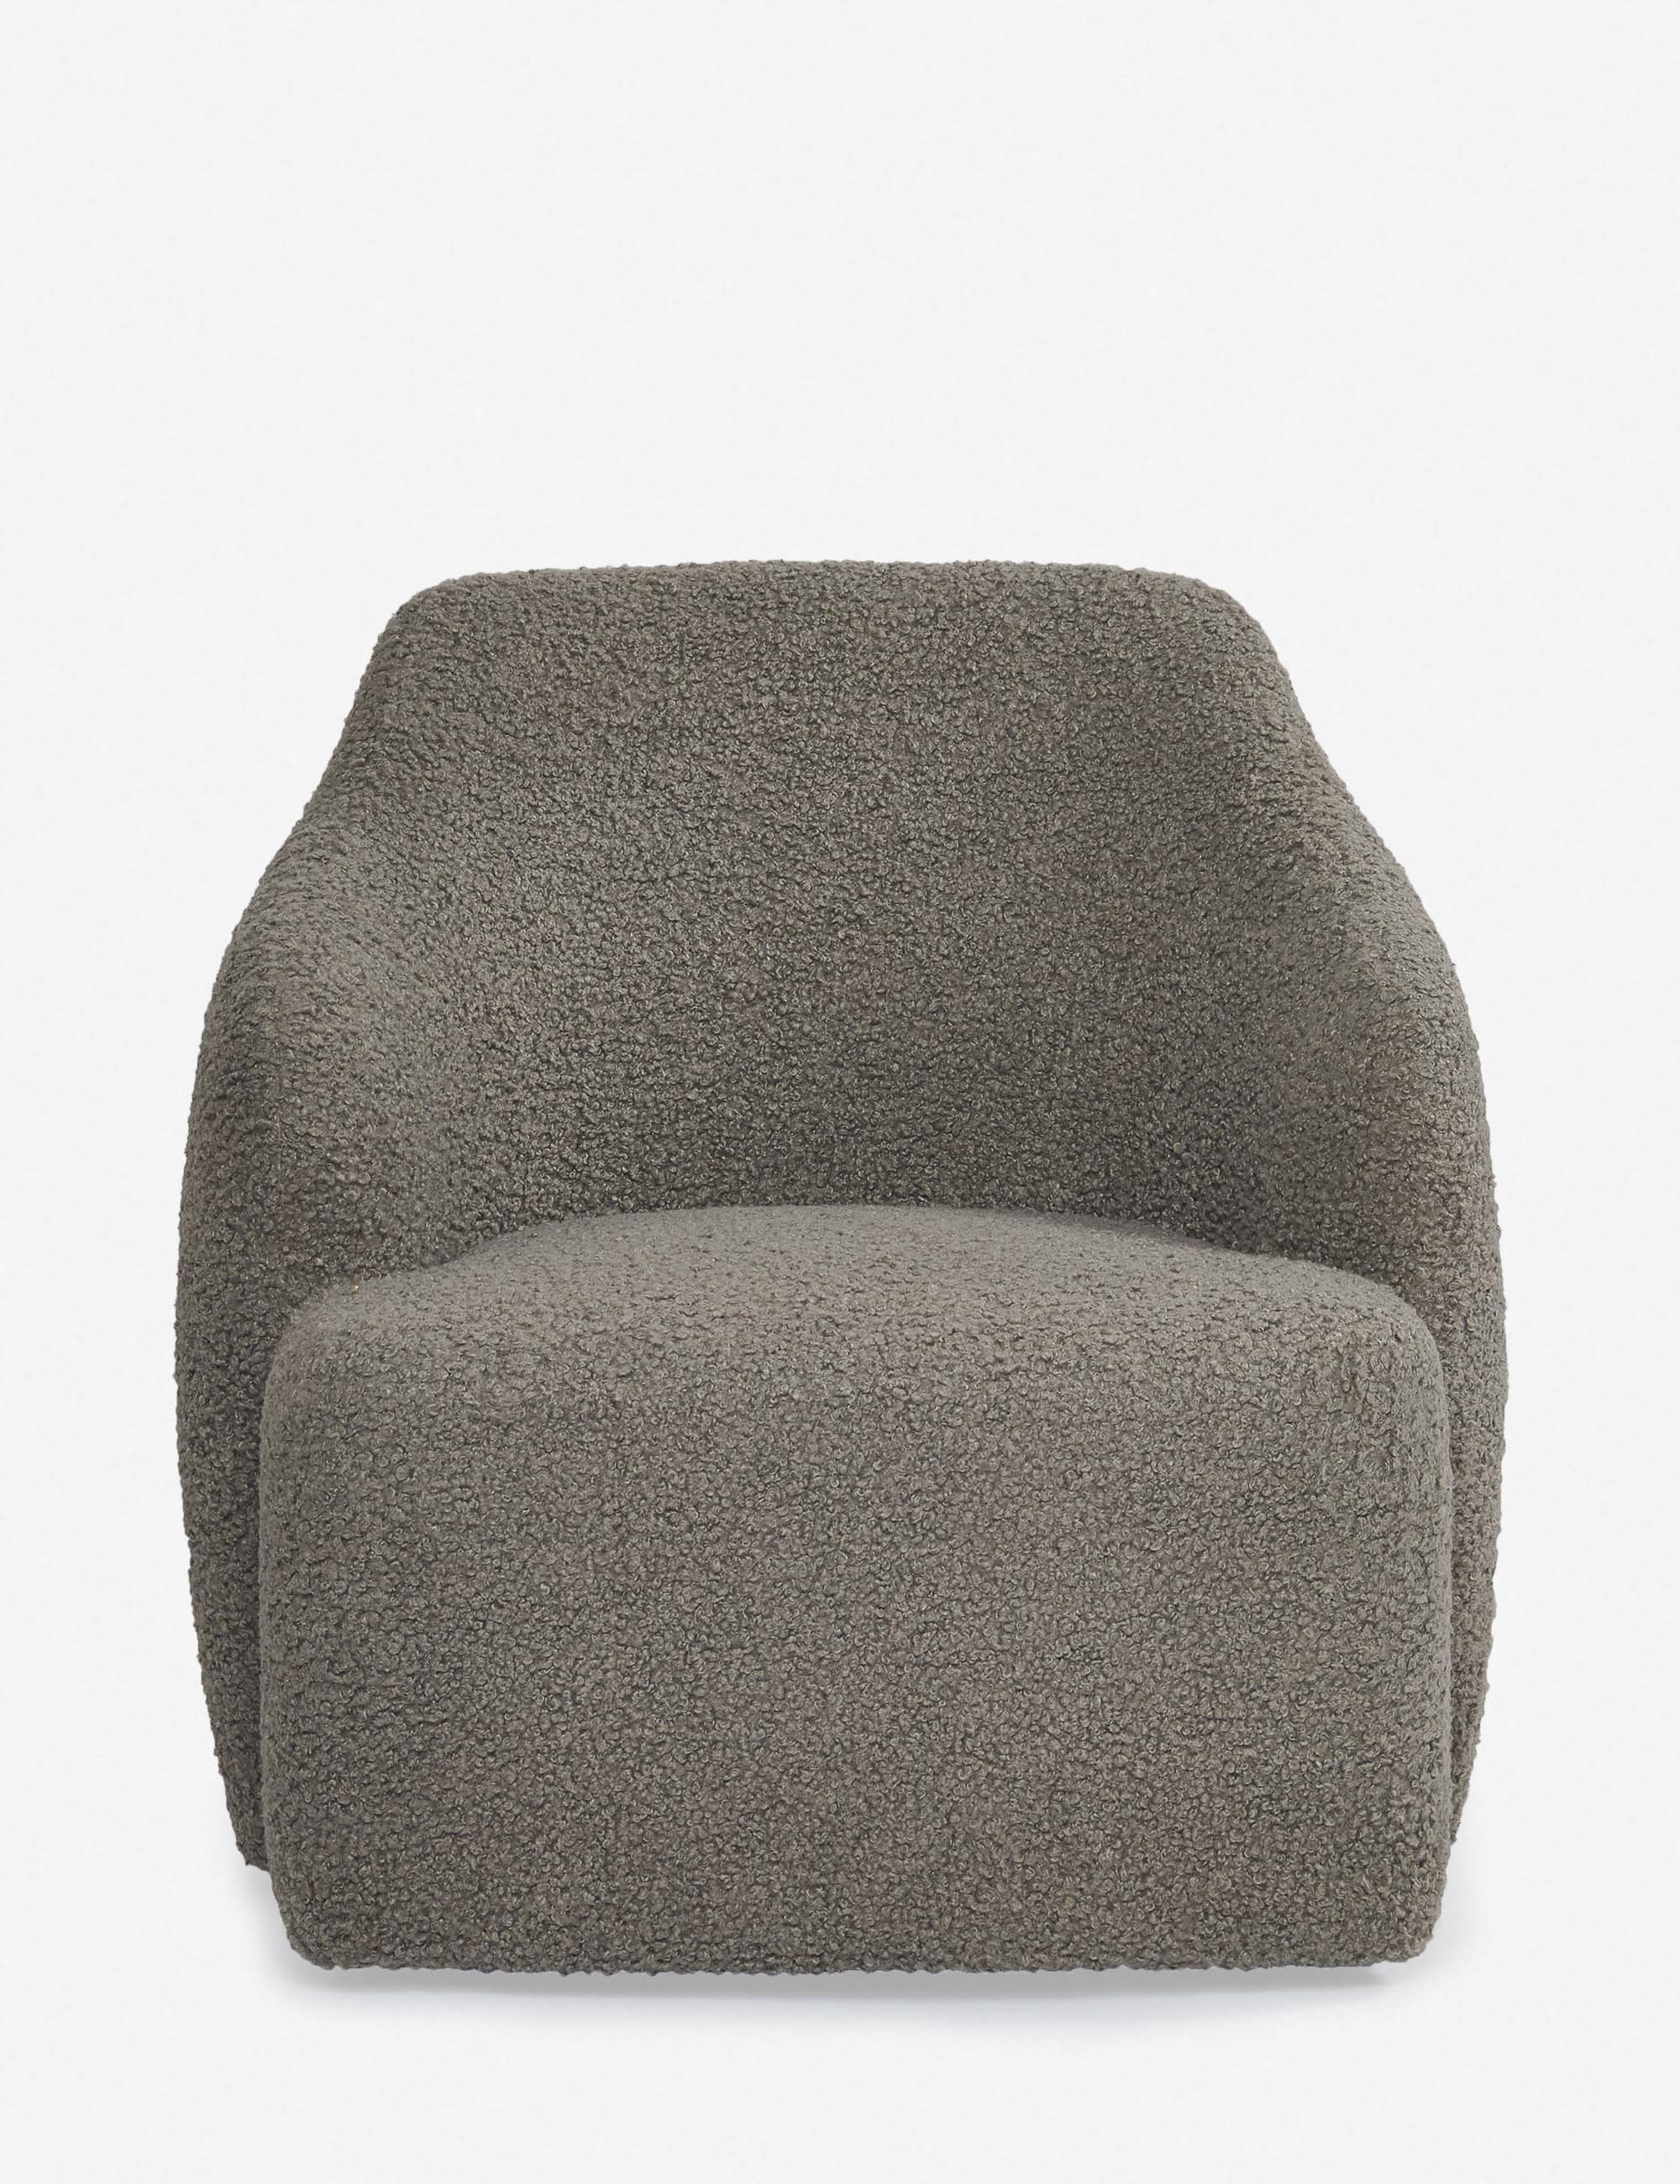 Tobi Swivel Chair, Gray - Image 0